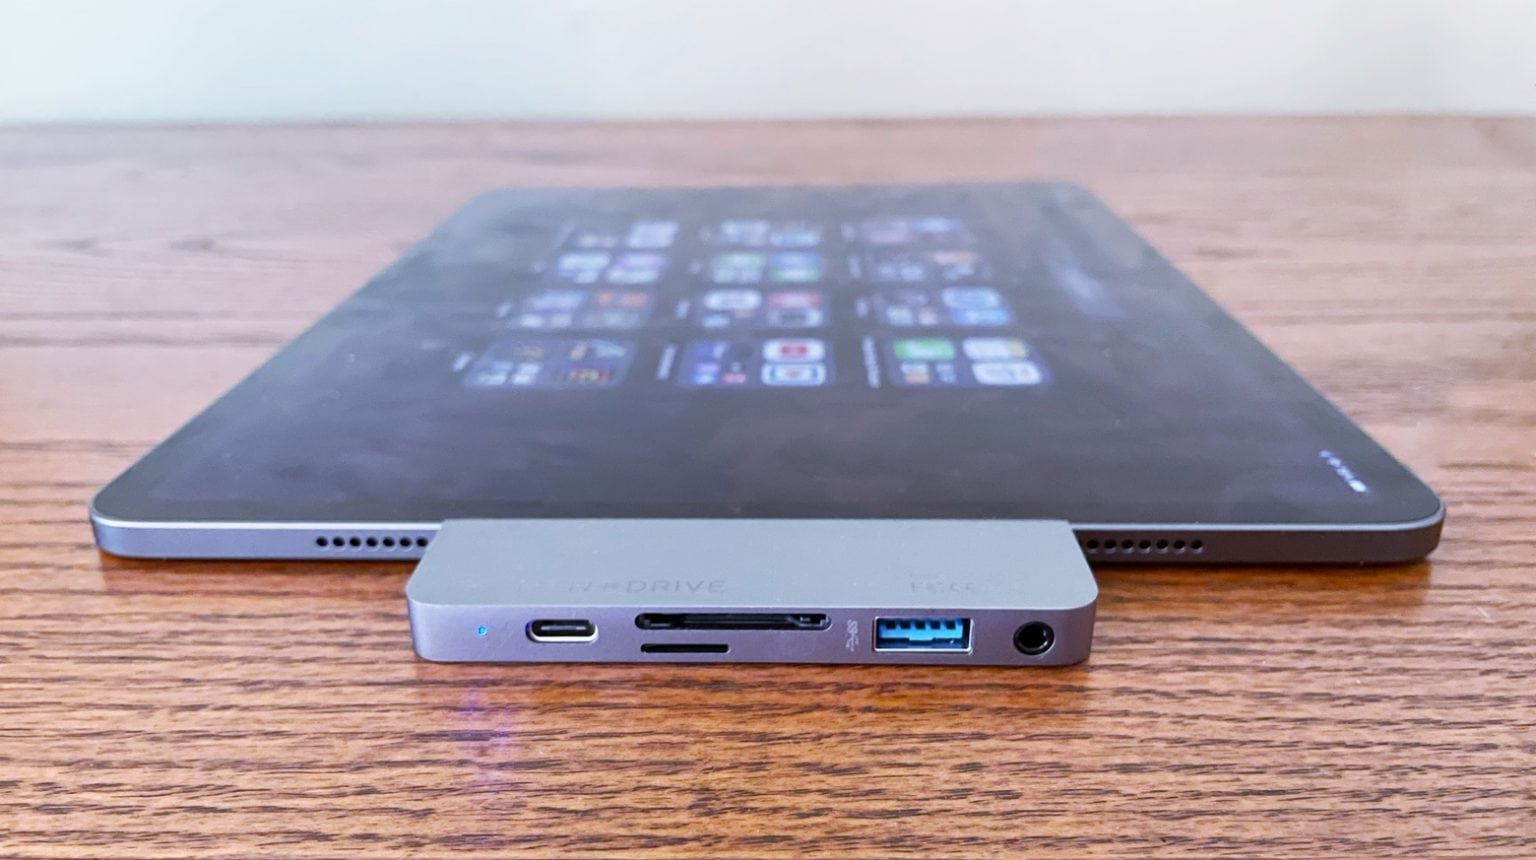 Sanho HyperDrive USB-C 6-in-1 Hub for iPad review